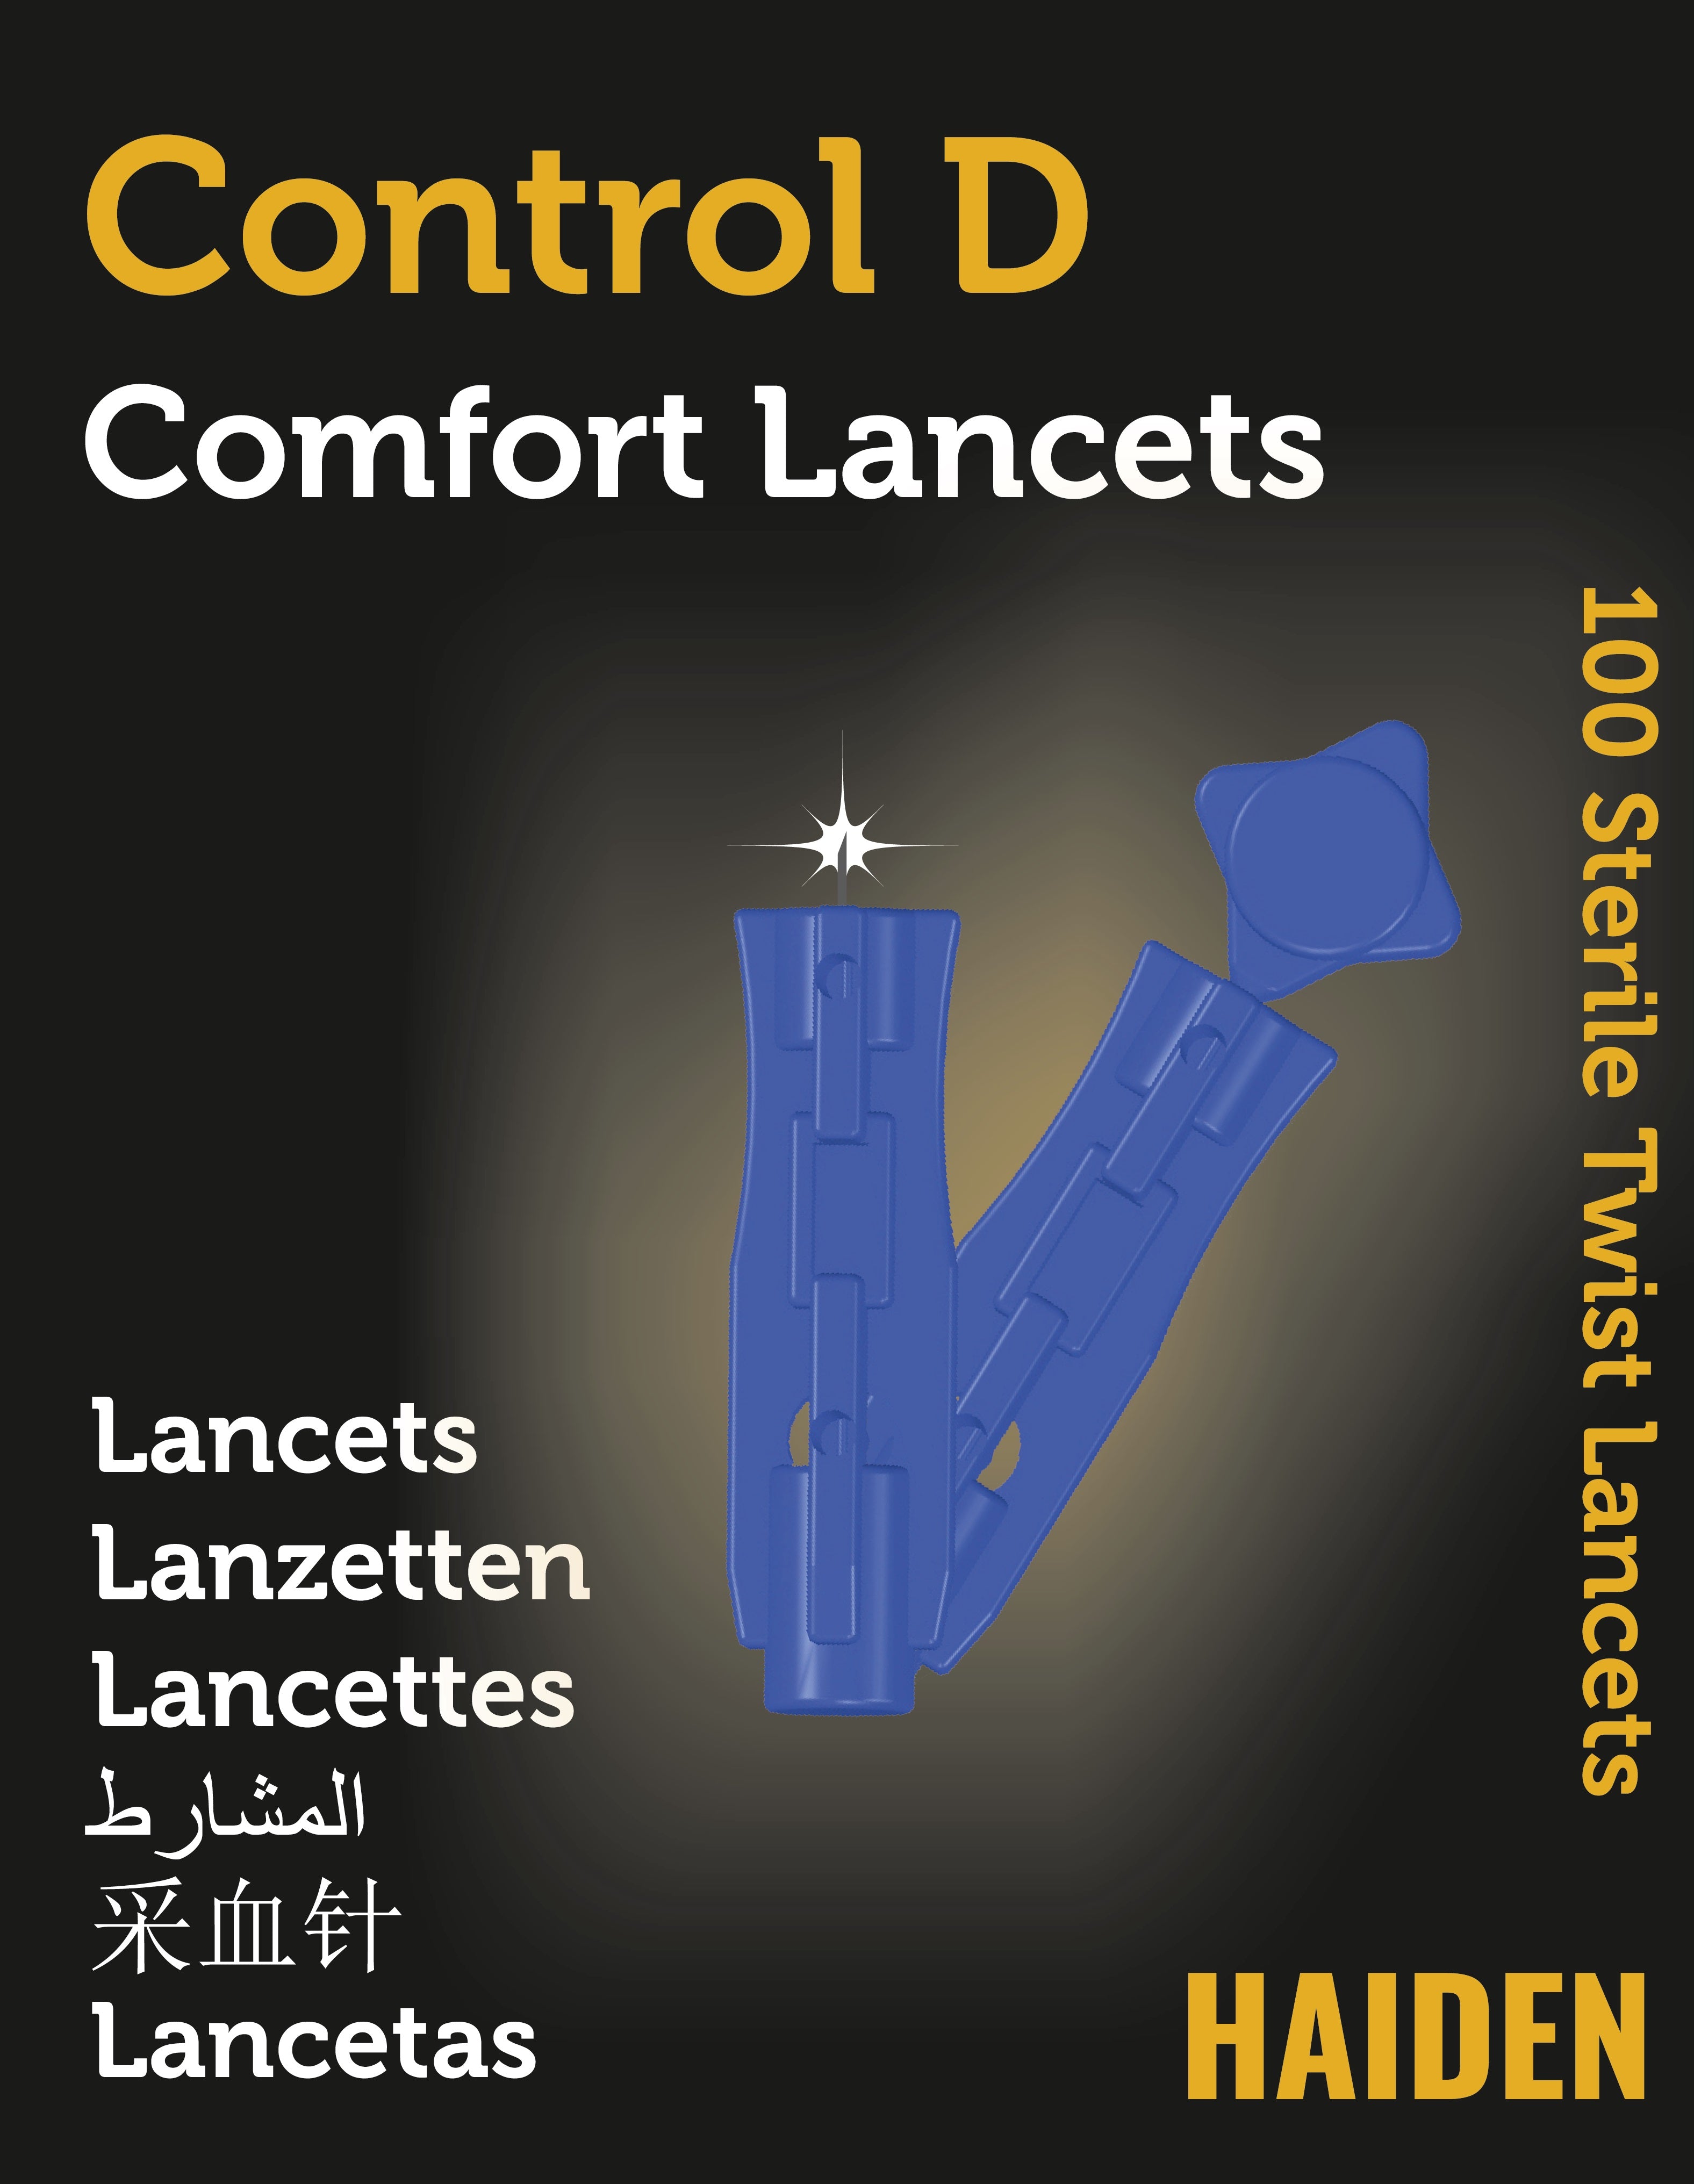 Control D 100 Comfort Lancets